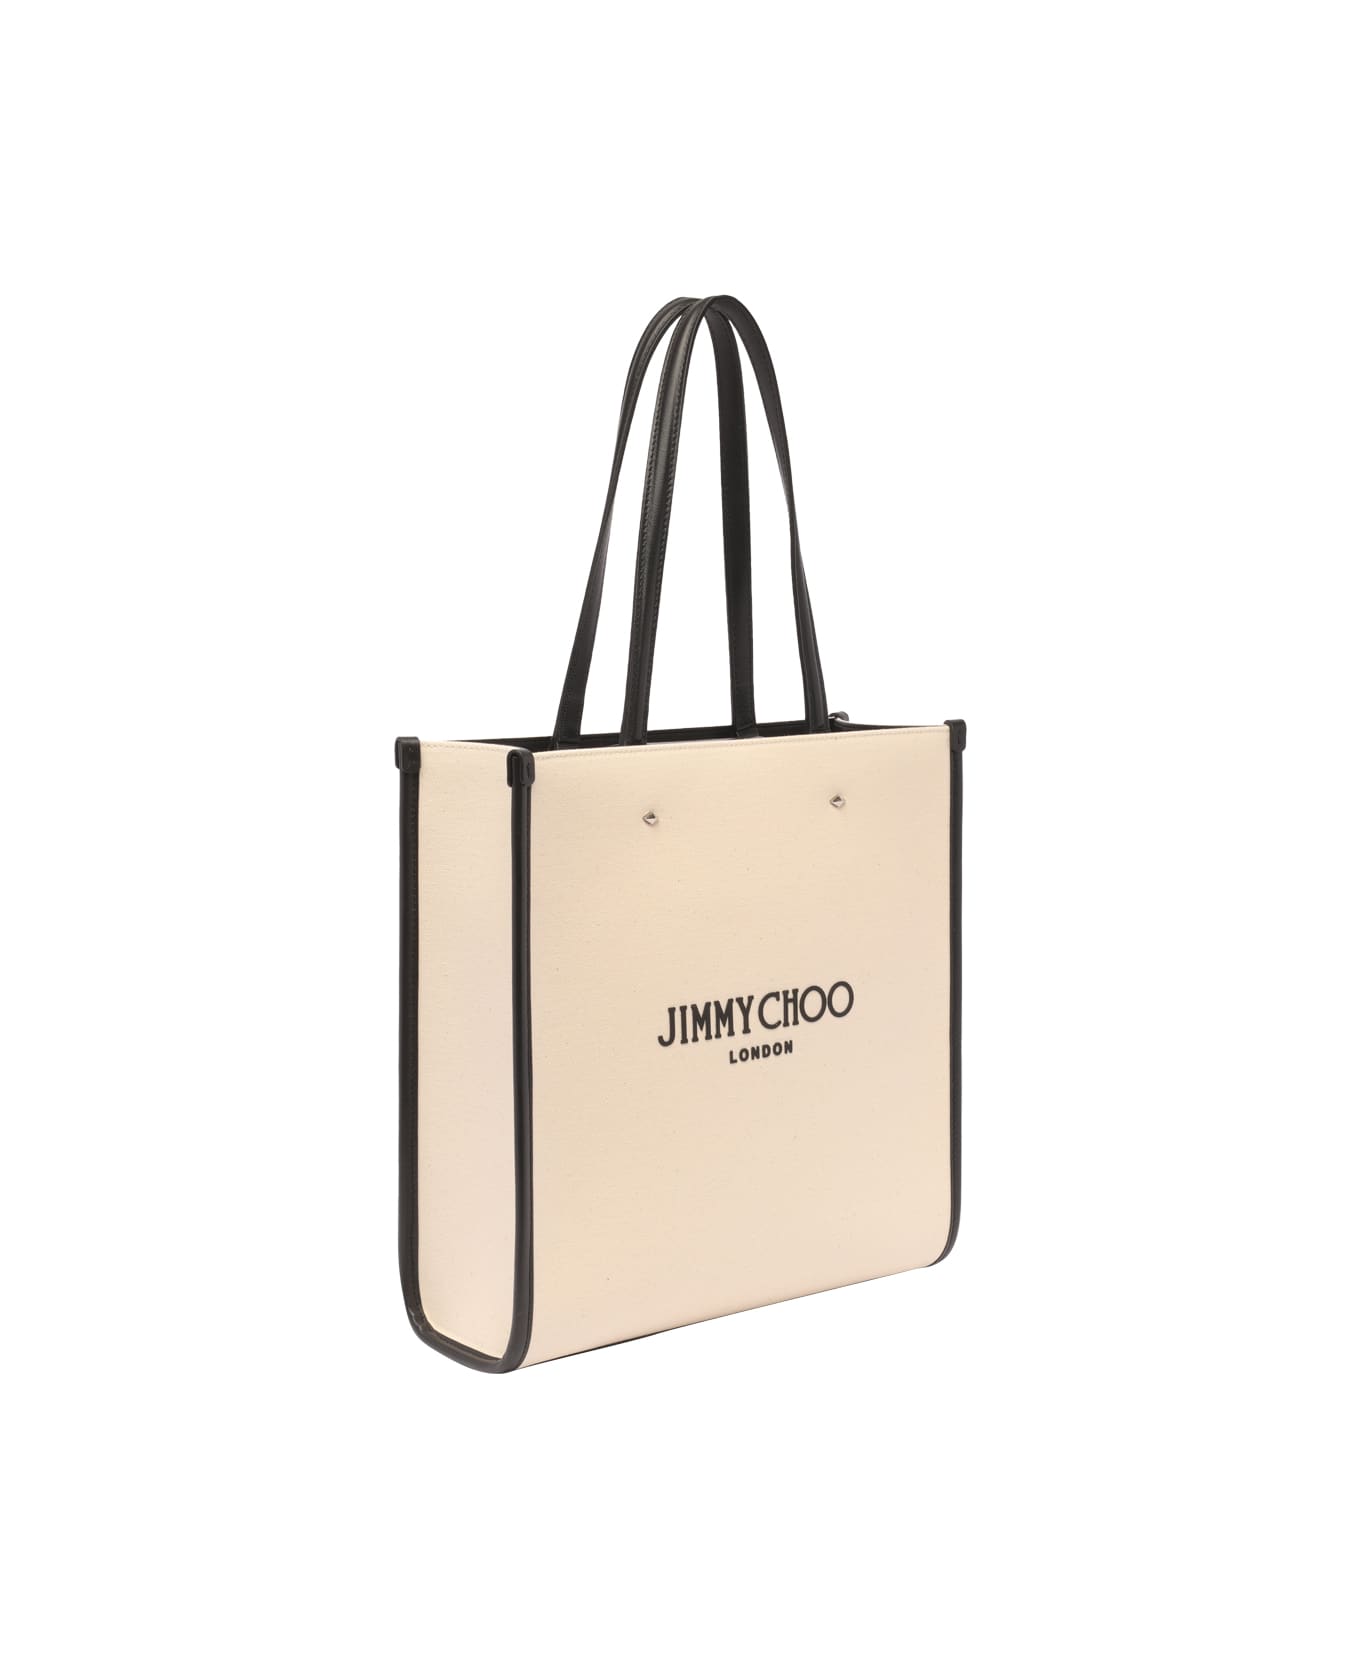 Jimmy Choo Logo Tote Bag - White トートバッグ